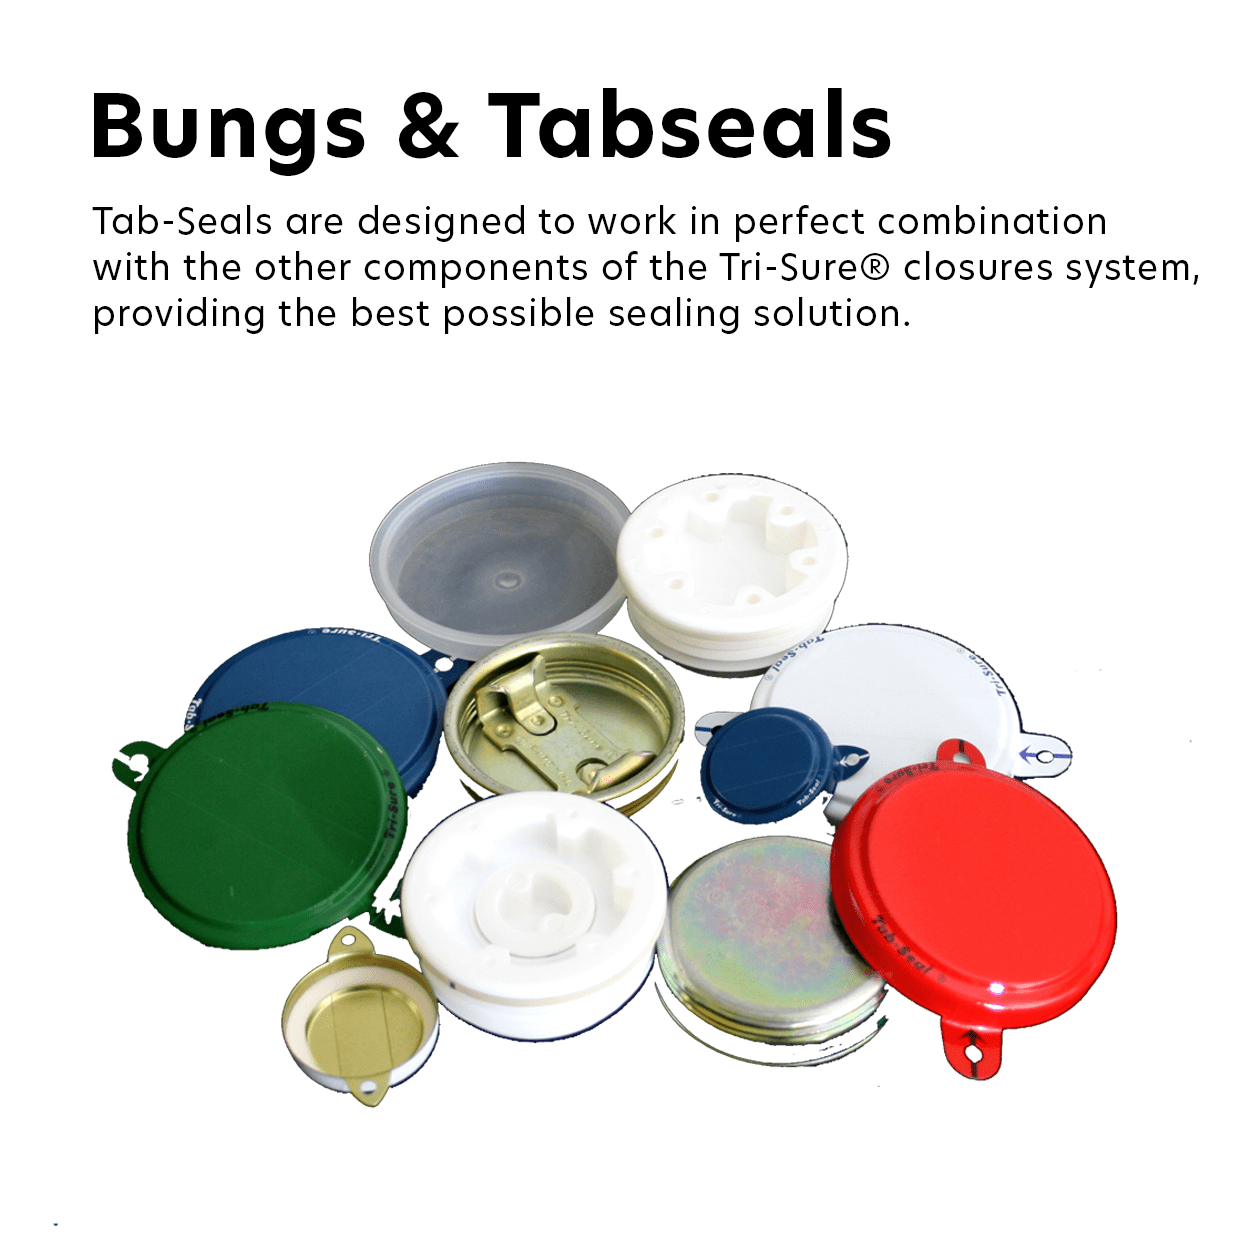 Bungs & Tabseals